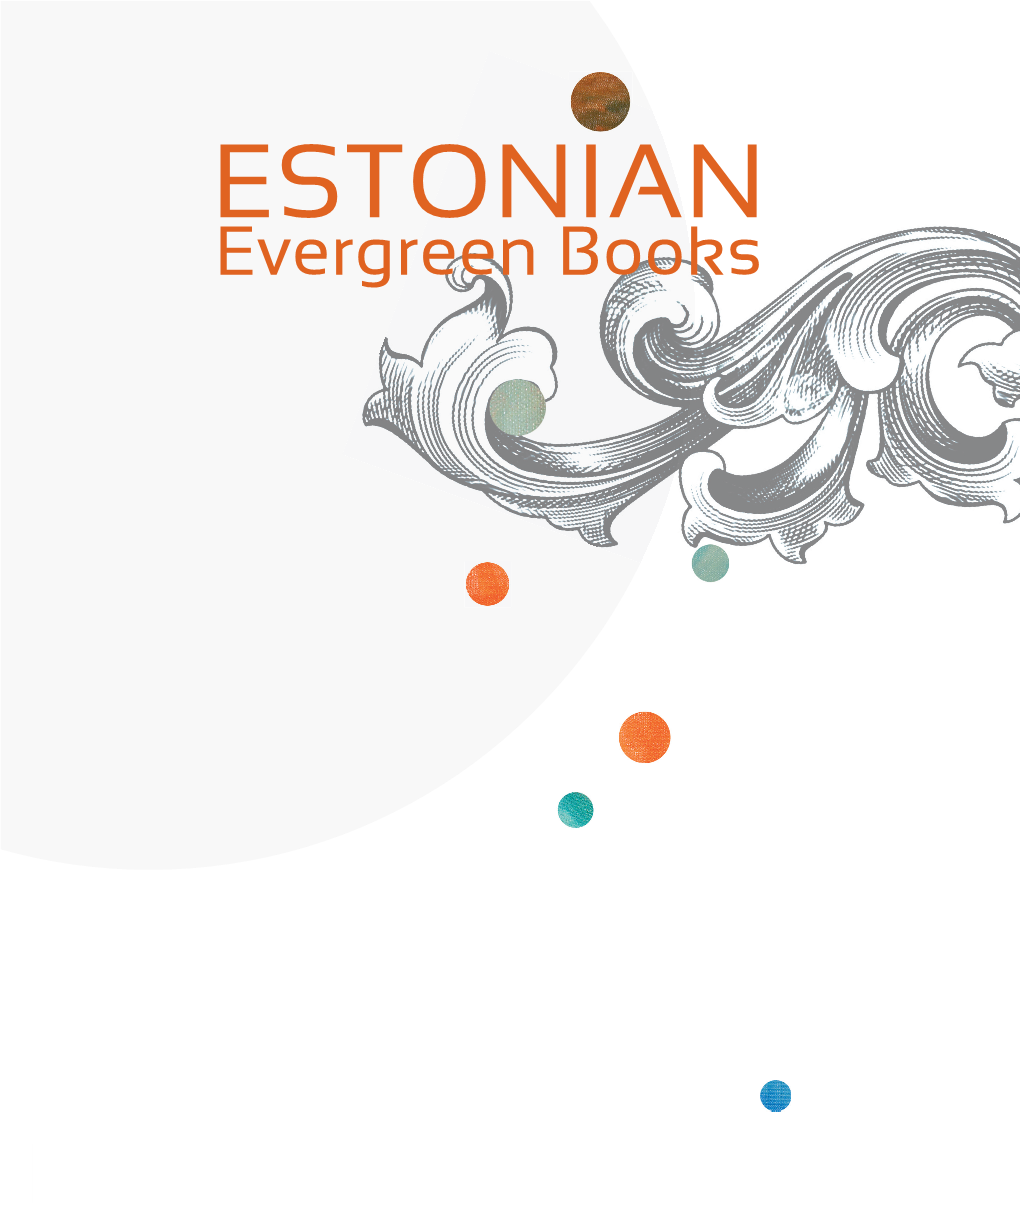 Estonian Evergreen Trykk Pakett 09.02.2016.Indd